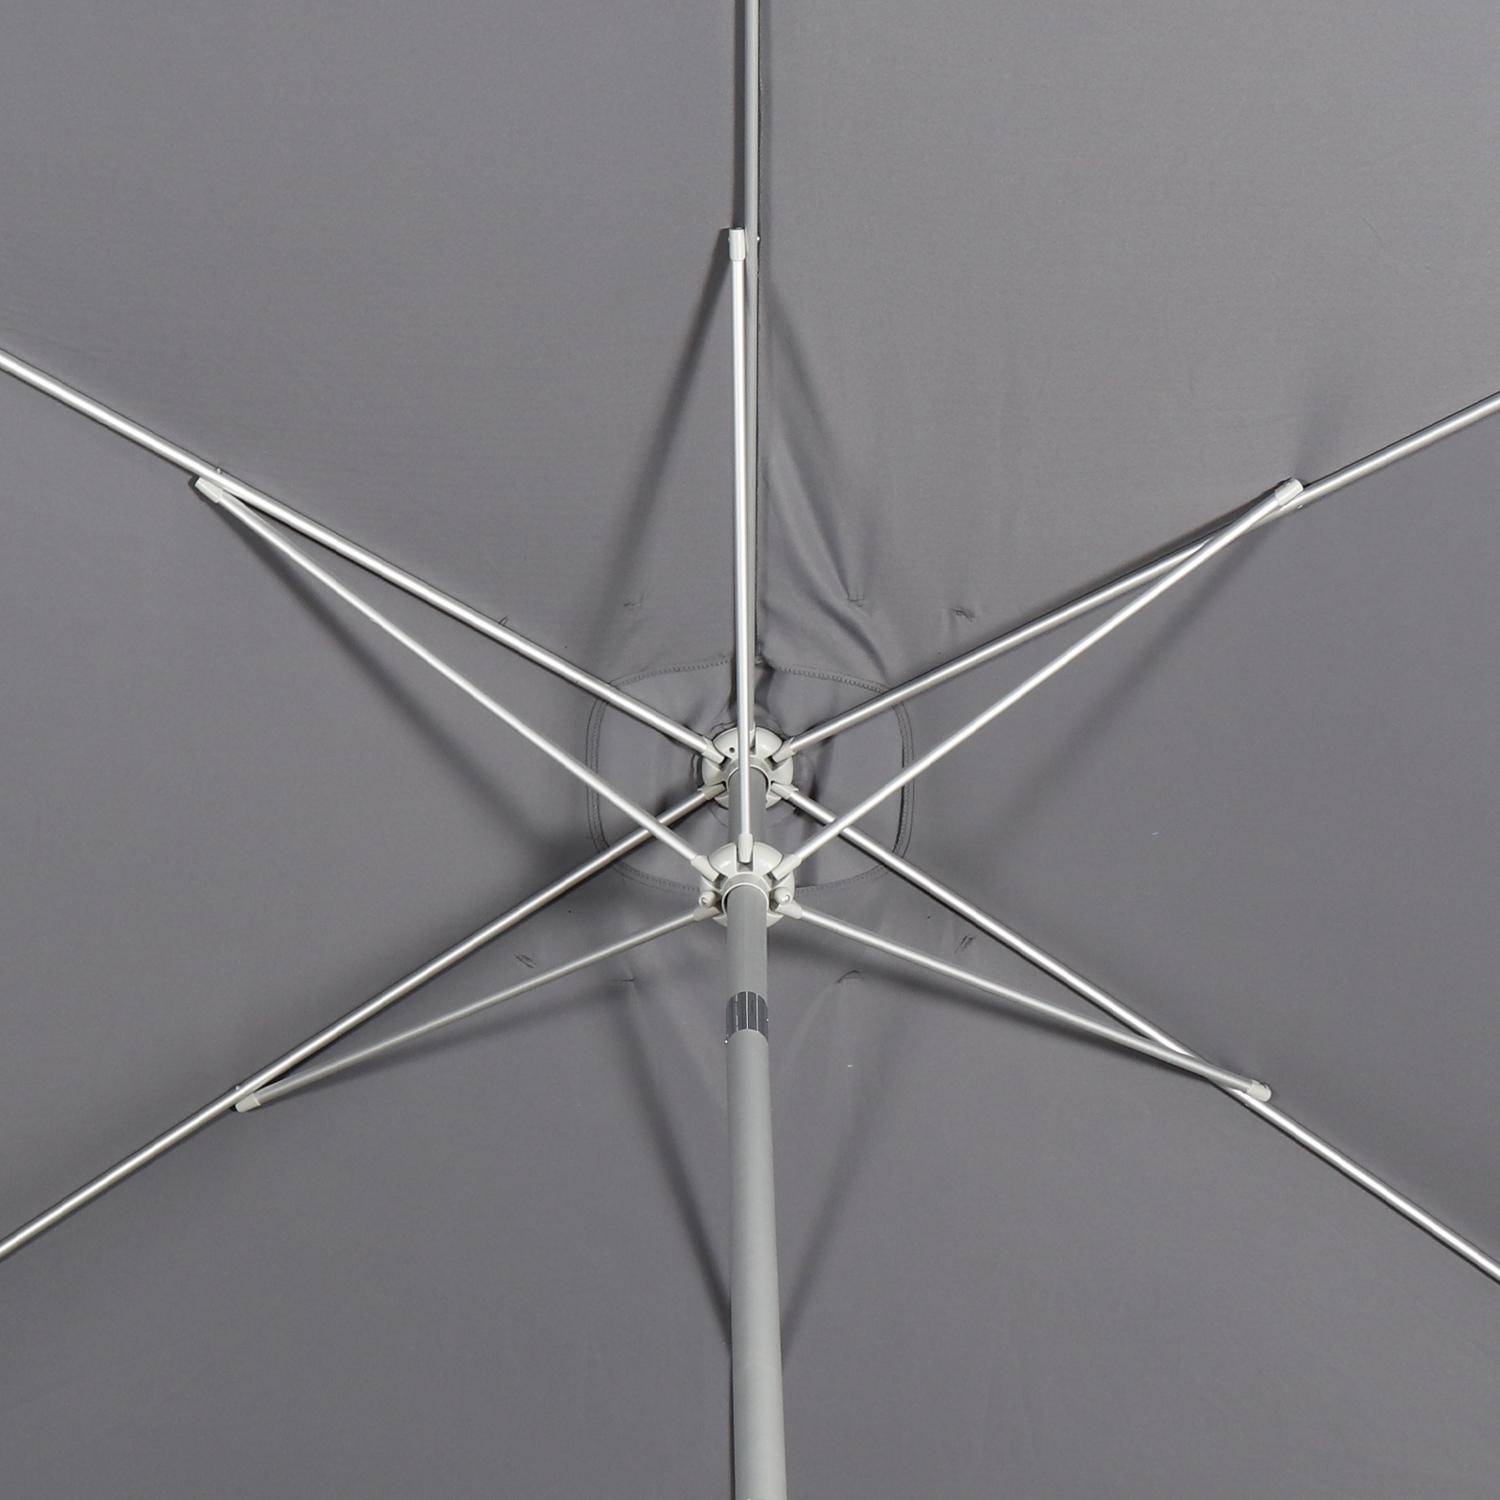 Stokparasol Wissant, 2x3m, grijs, geanodiseerd aluminium, openingshendel , 2x3m, grijs,sweeek,Photo8